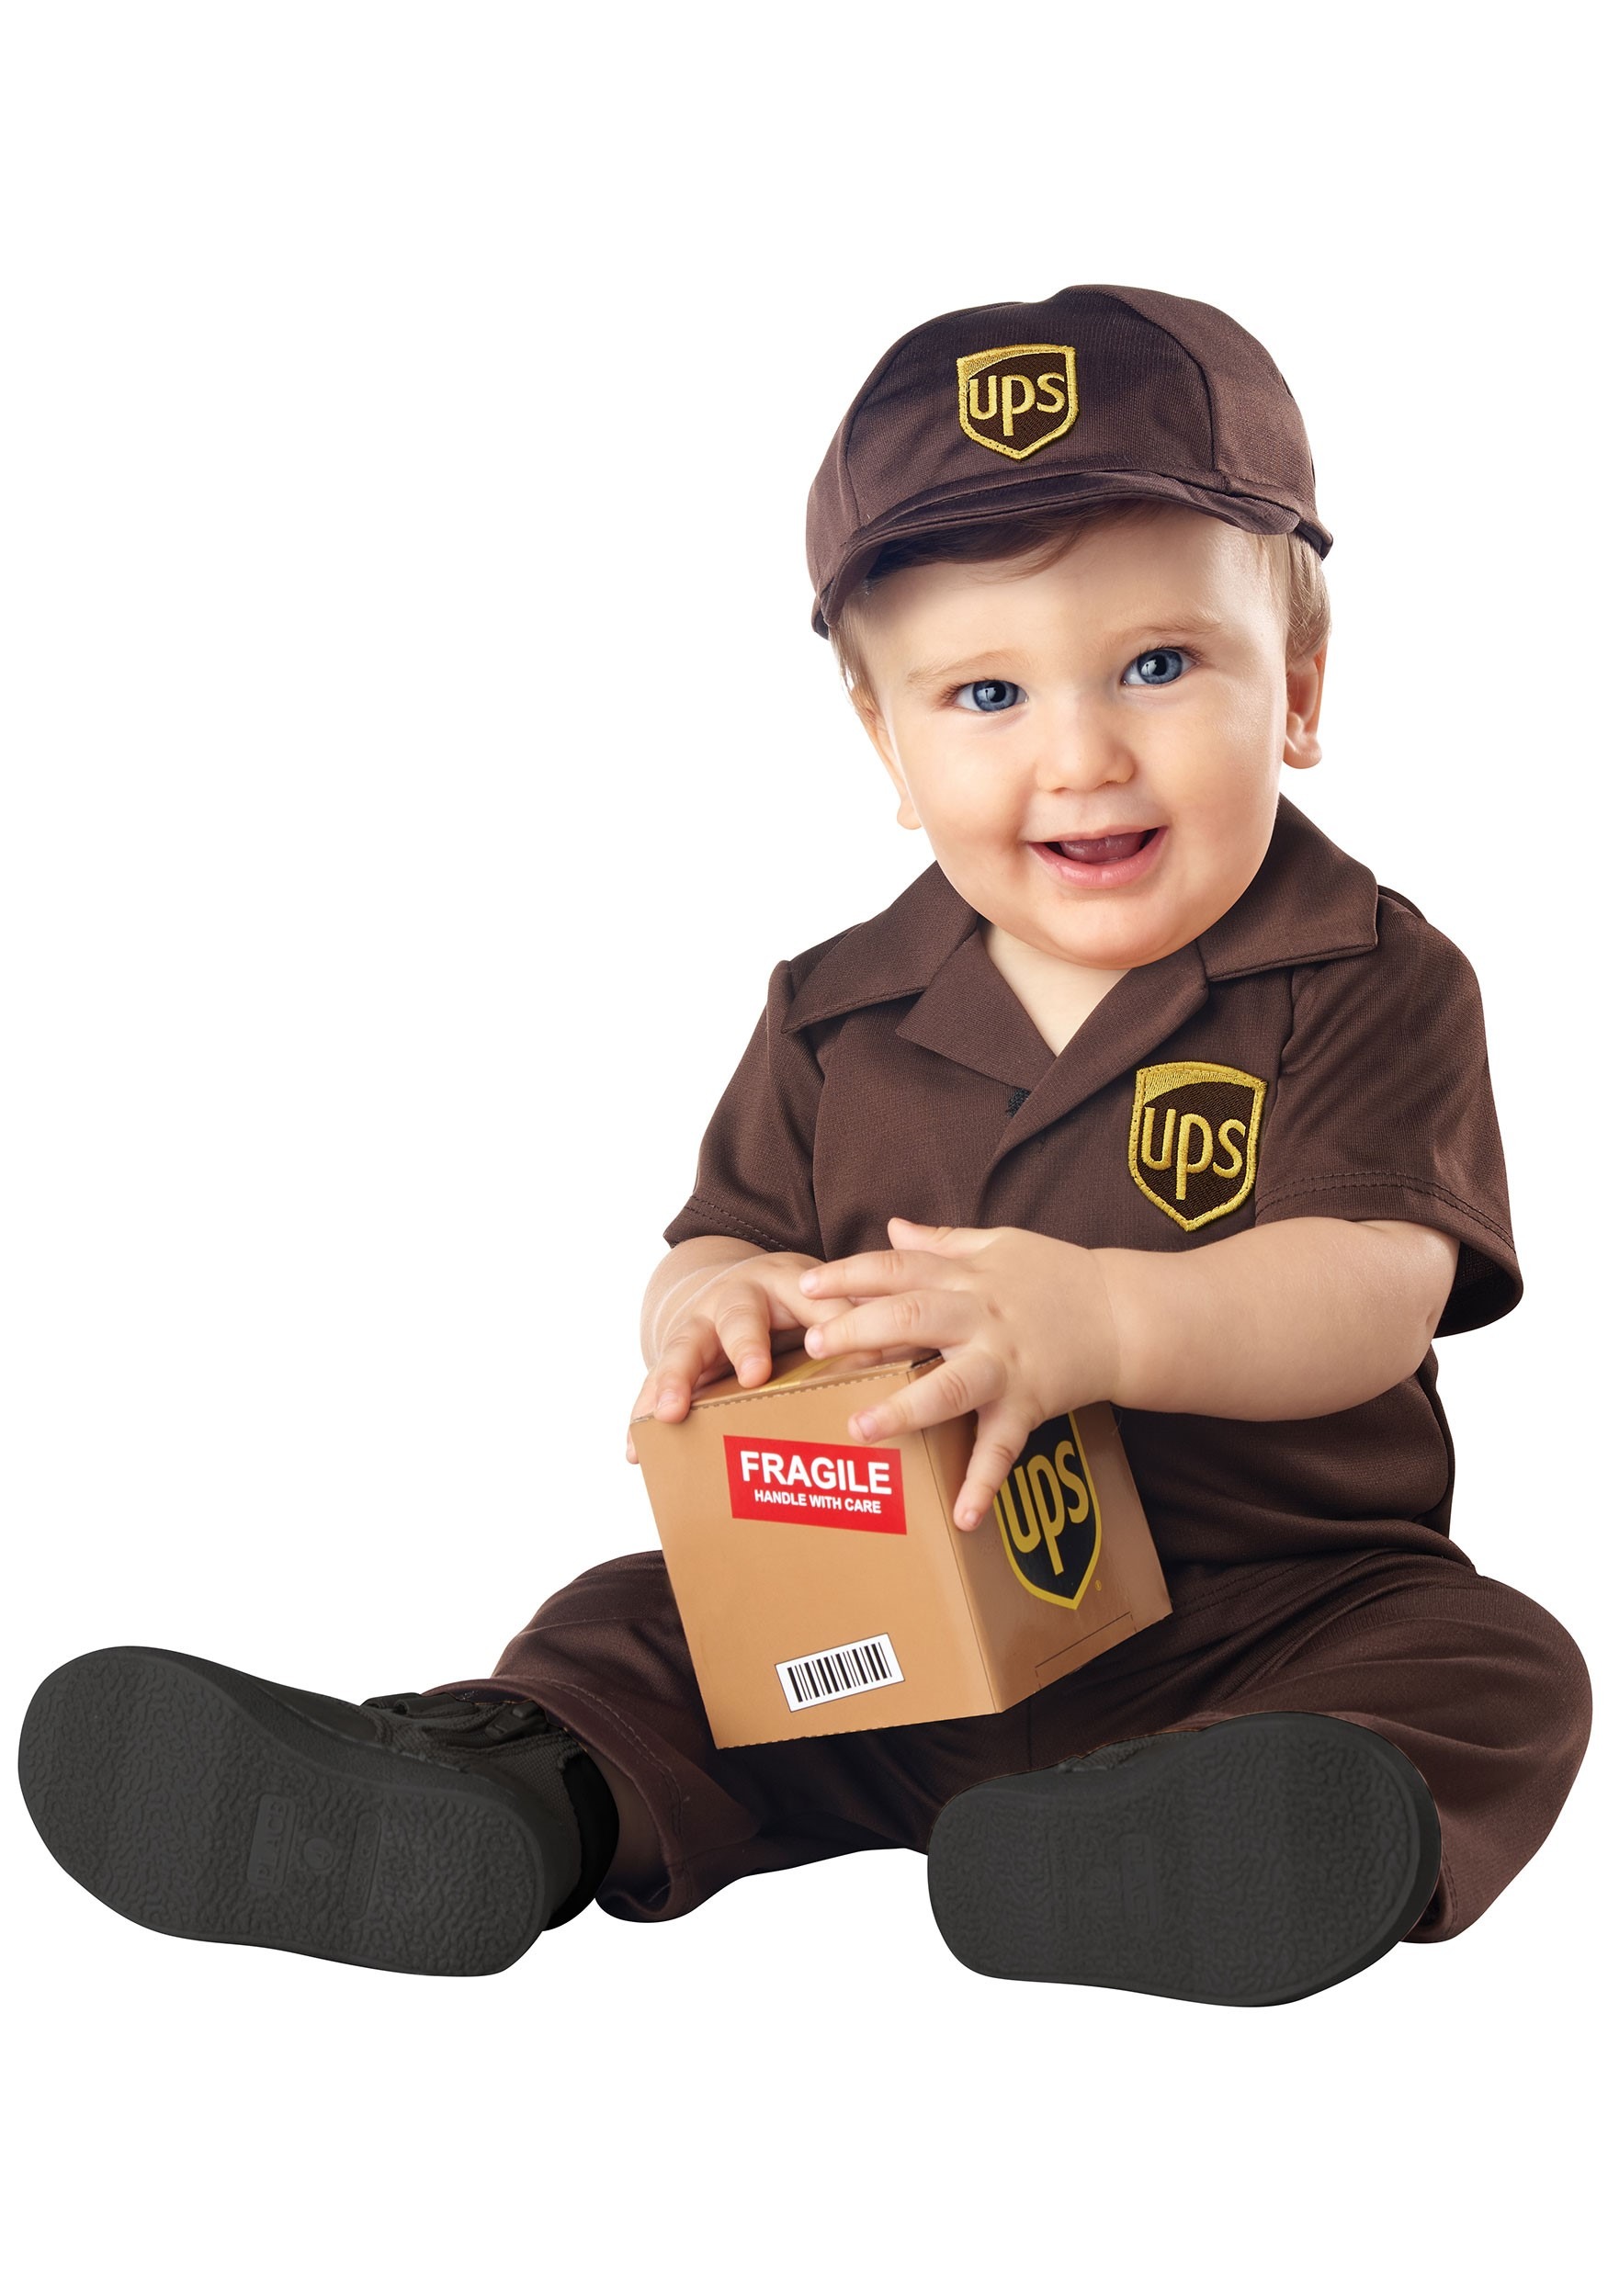 UPS Delivery Uniform Costume for Infants